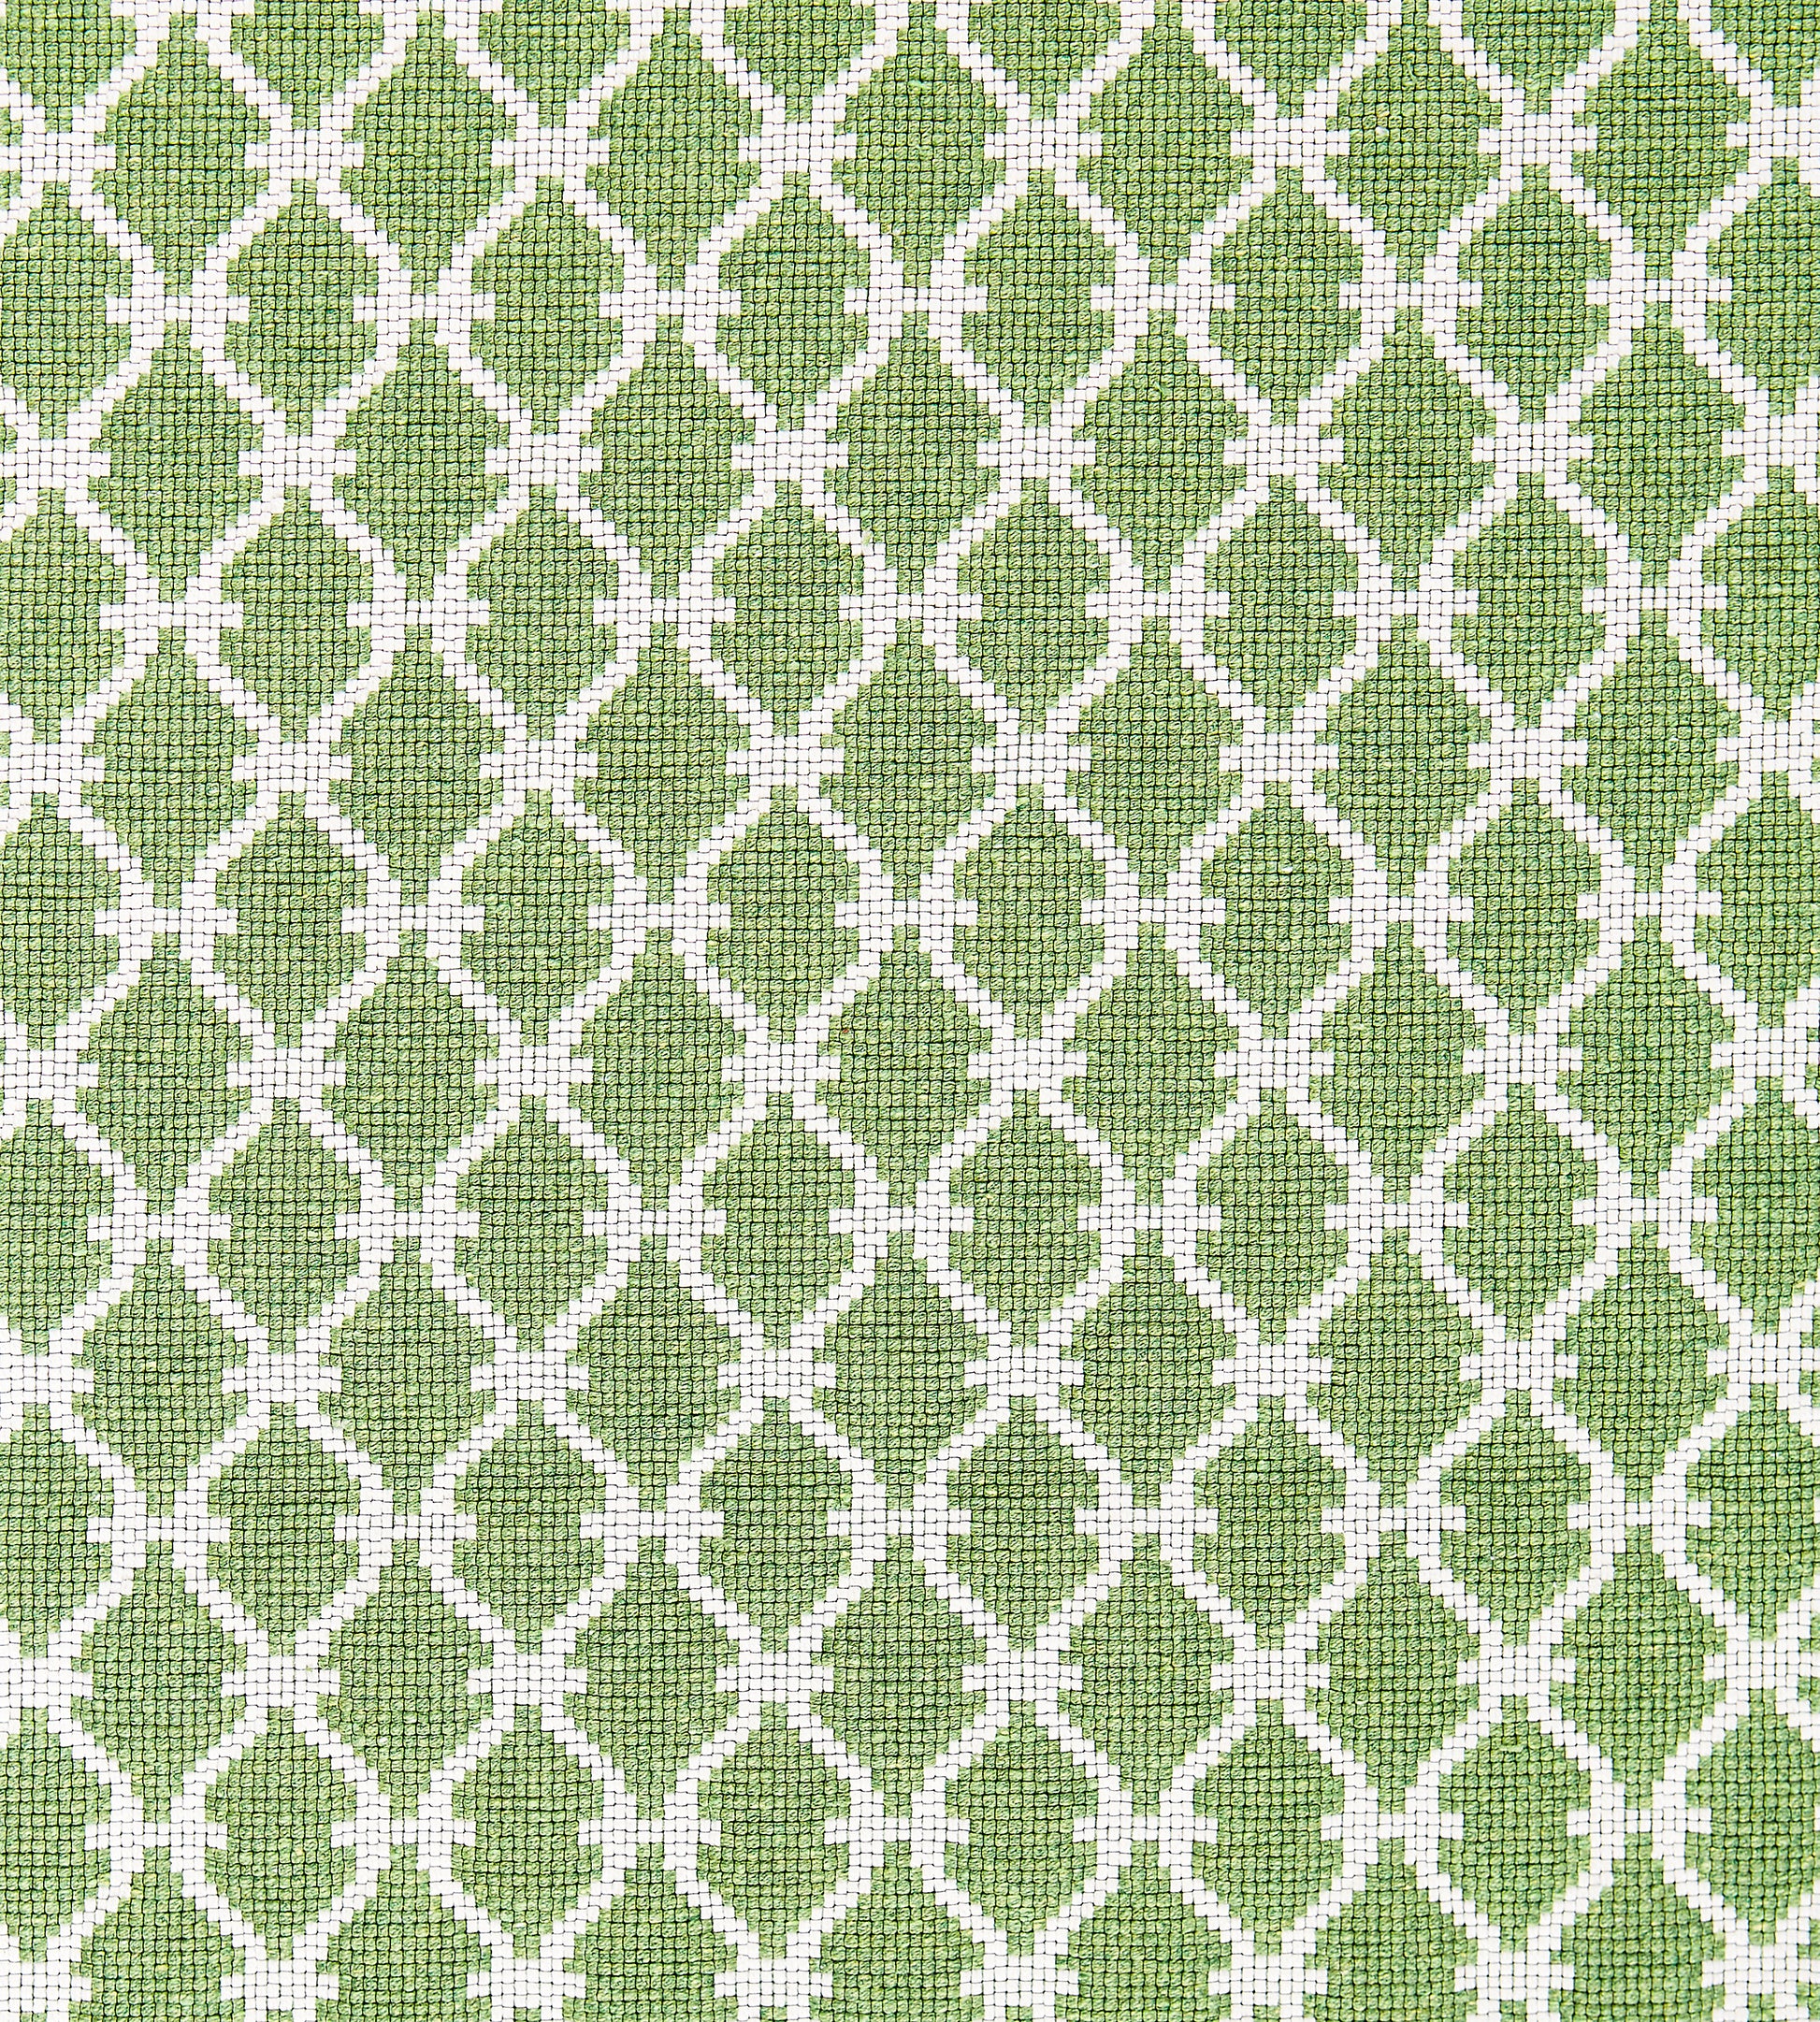 Purchase Scalamandre Fabric Pattern number SC 000427009, Trellis Weave Jade 1